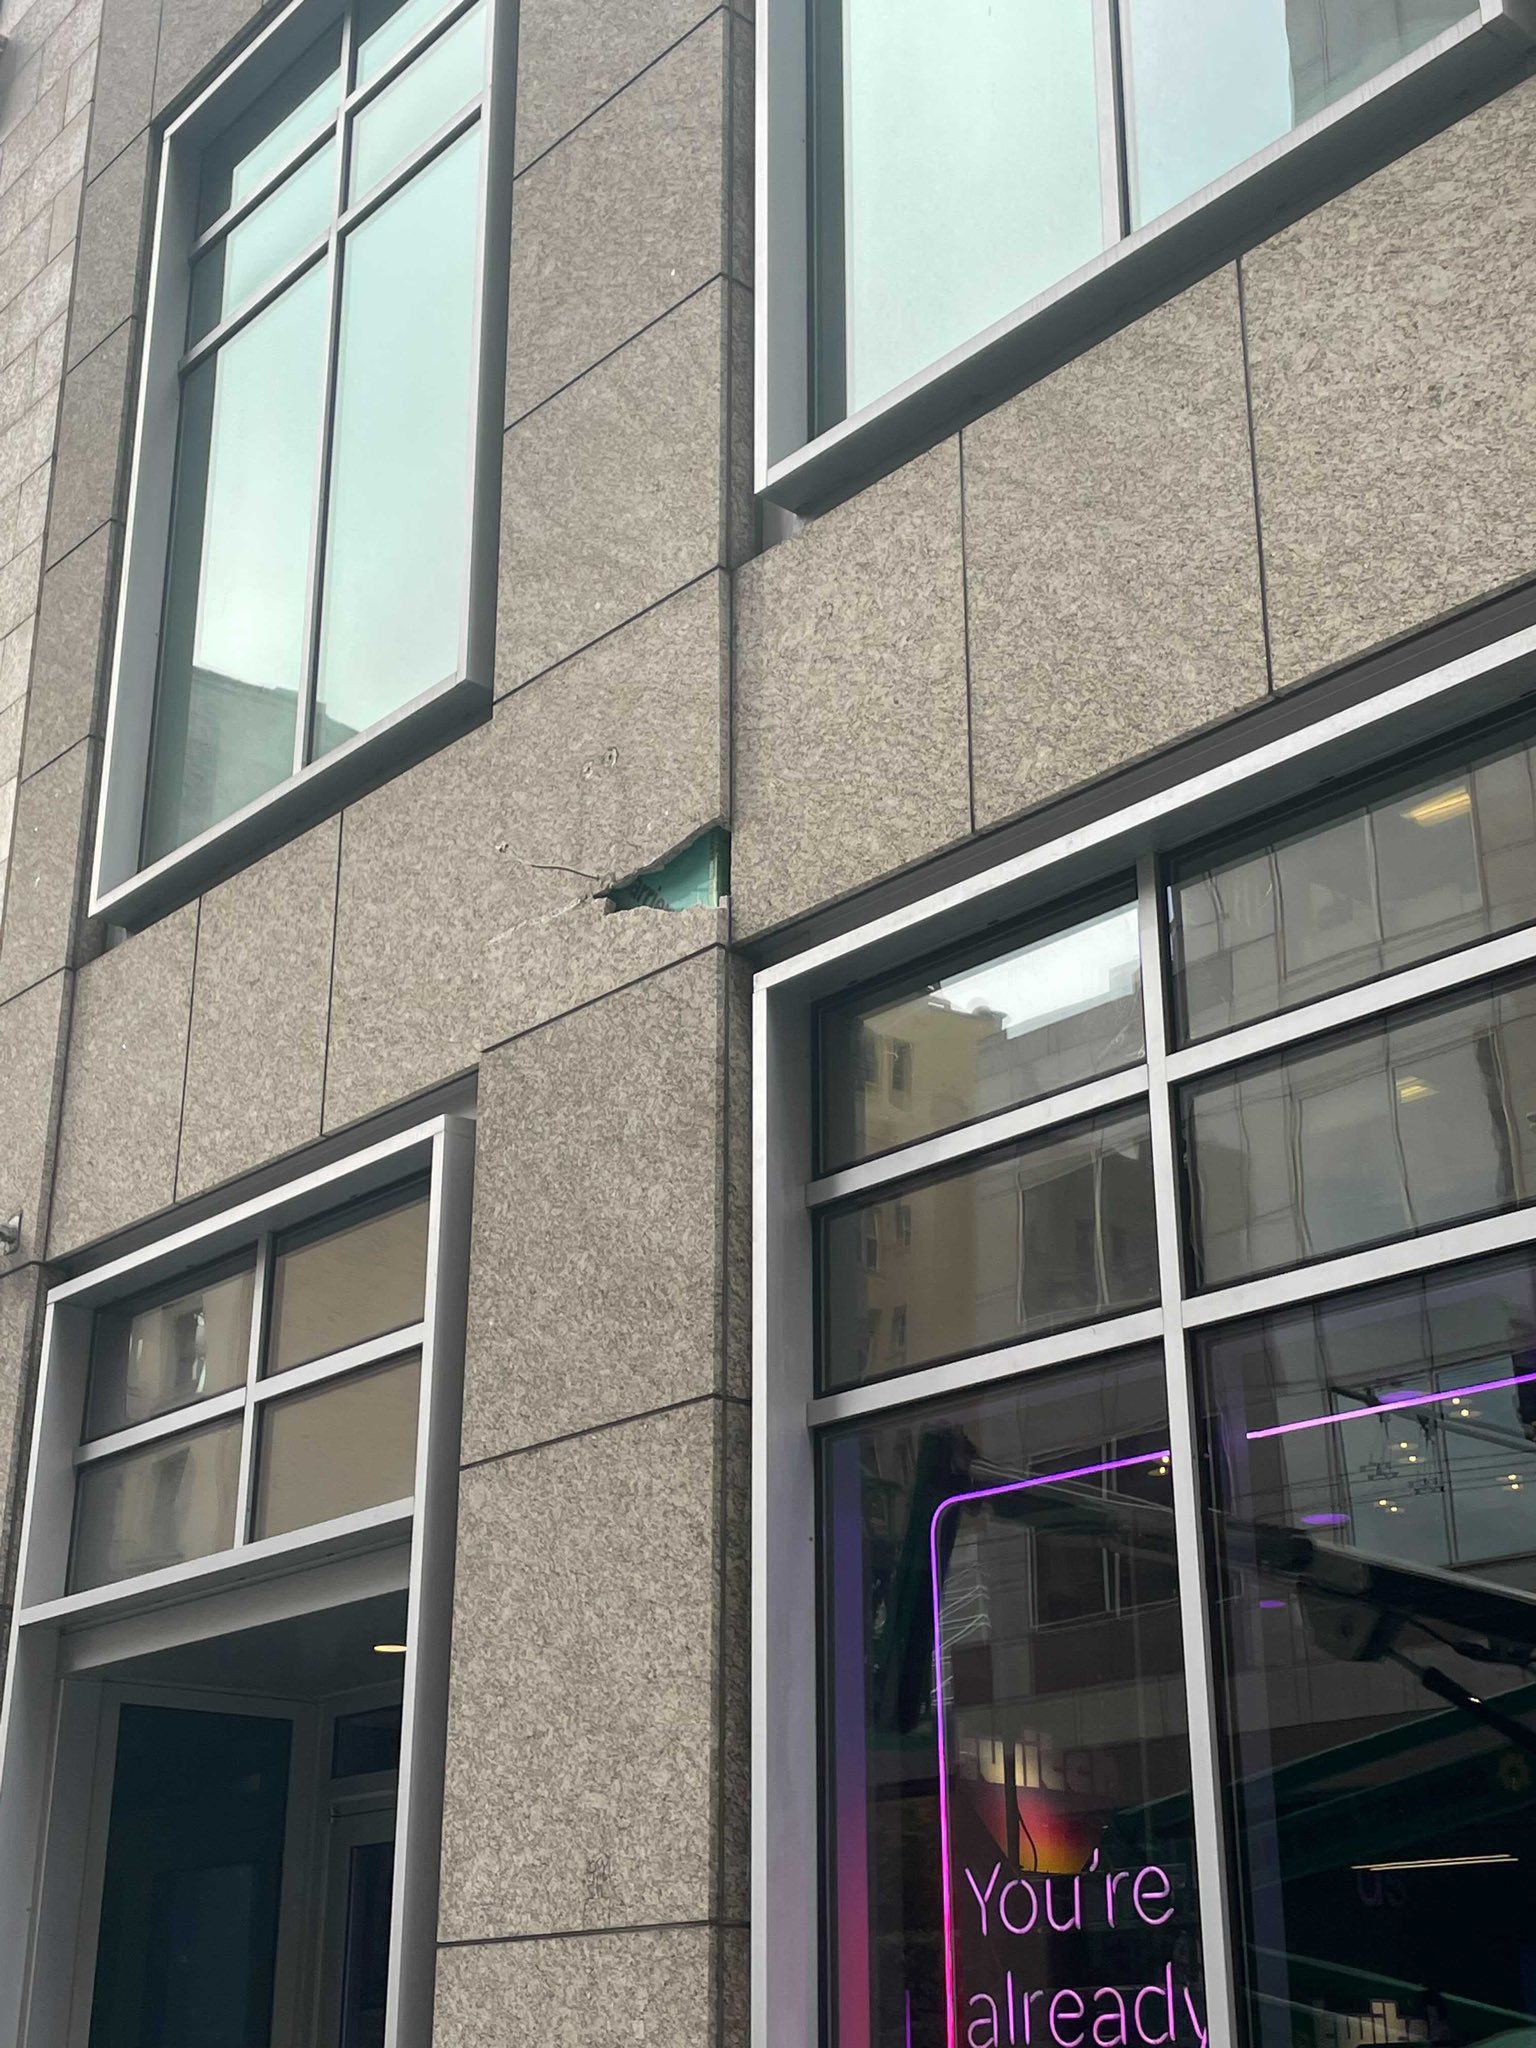 Фасад офиса Twitch после кражи вывески | Источник: twitter.com/Mucx